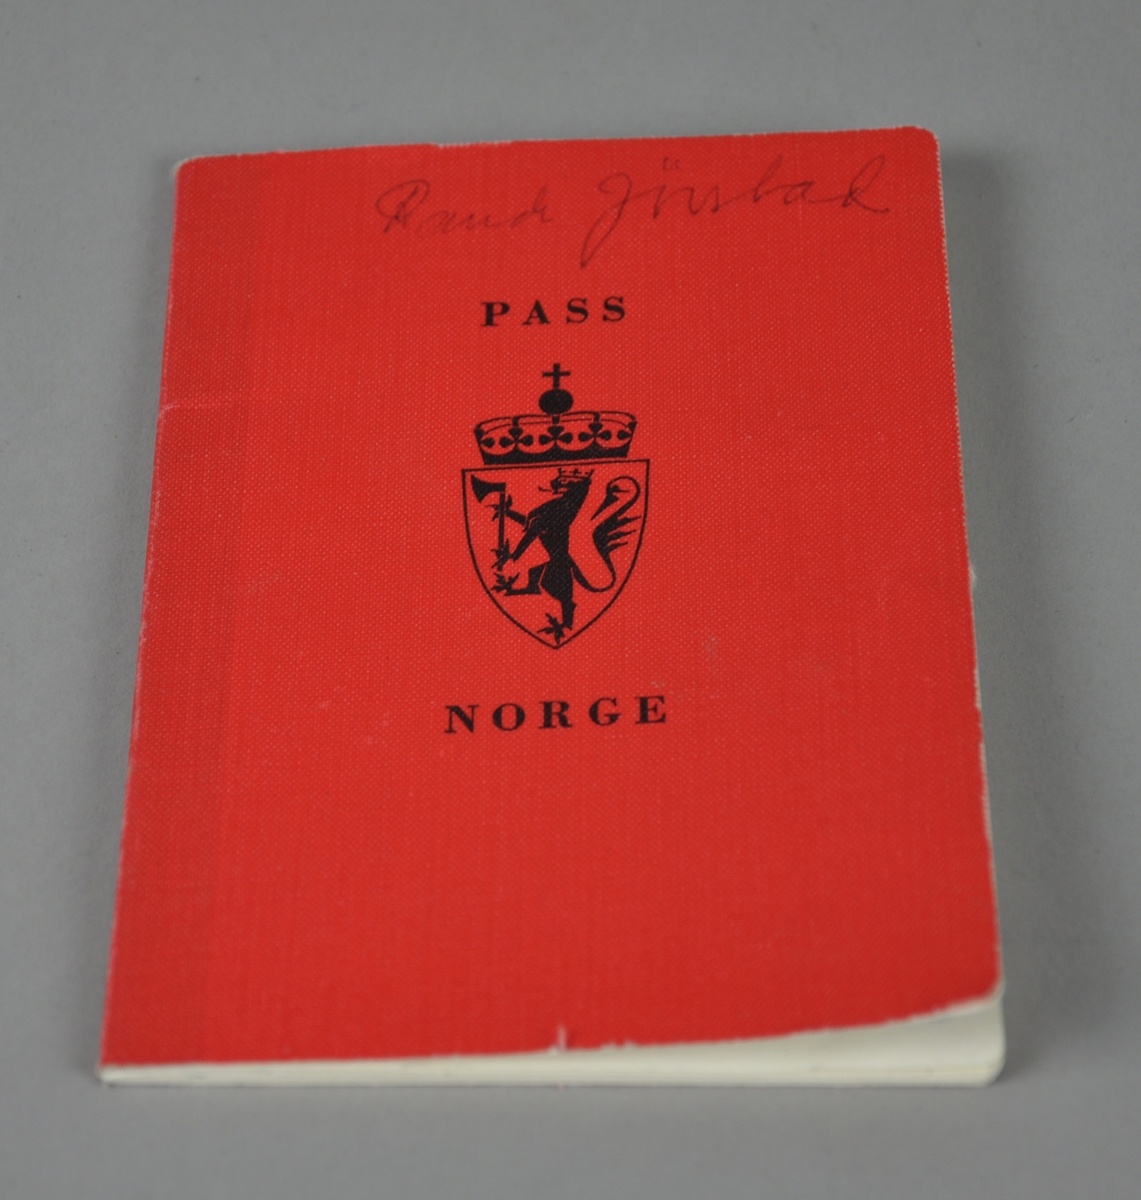 Norsk pass av rødfarget papir.